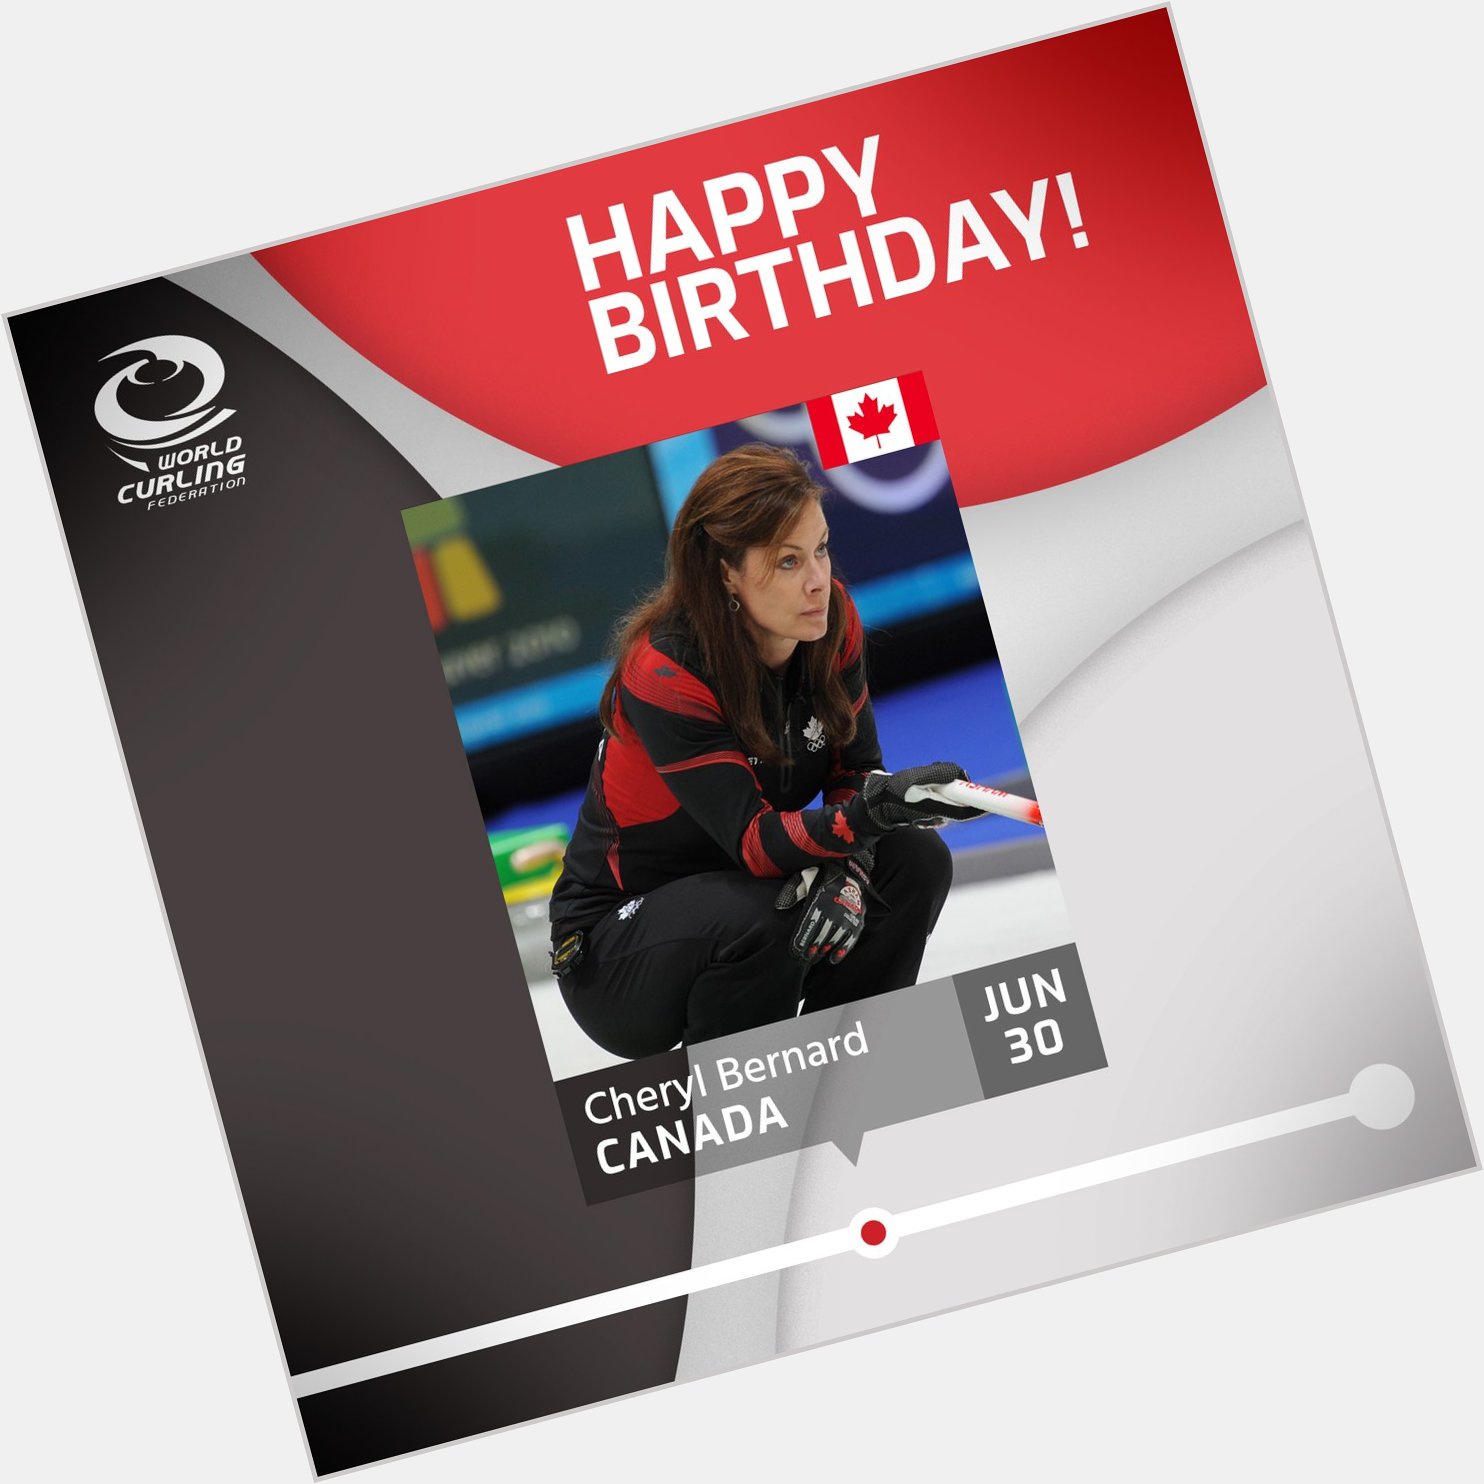 Join us in wishing 2x Olympian, Cheryl Bernard, a very happy birthday!  